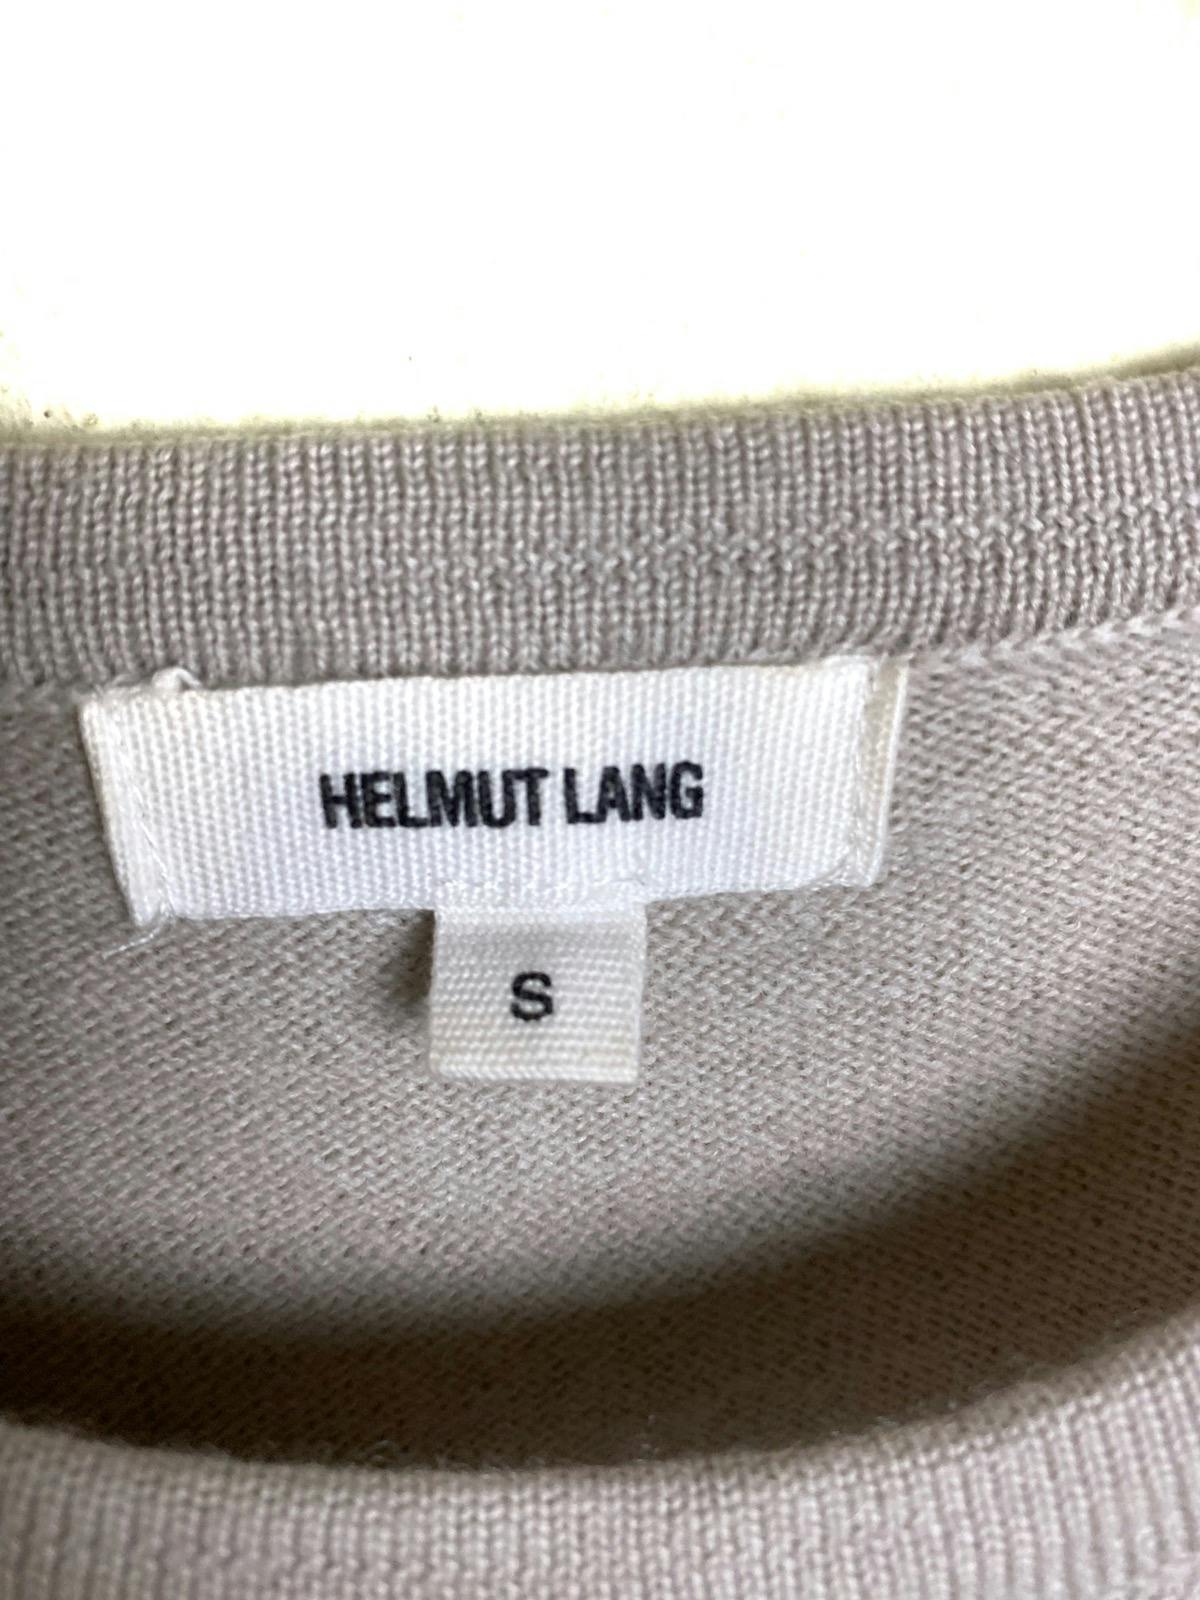 Helmut Lang Sweater Alpaca Viscose Blend Fall 2013 - 6